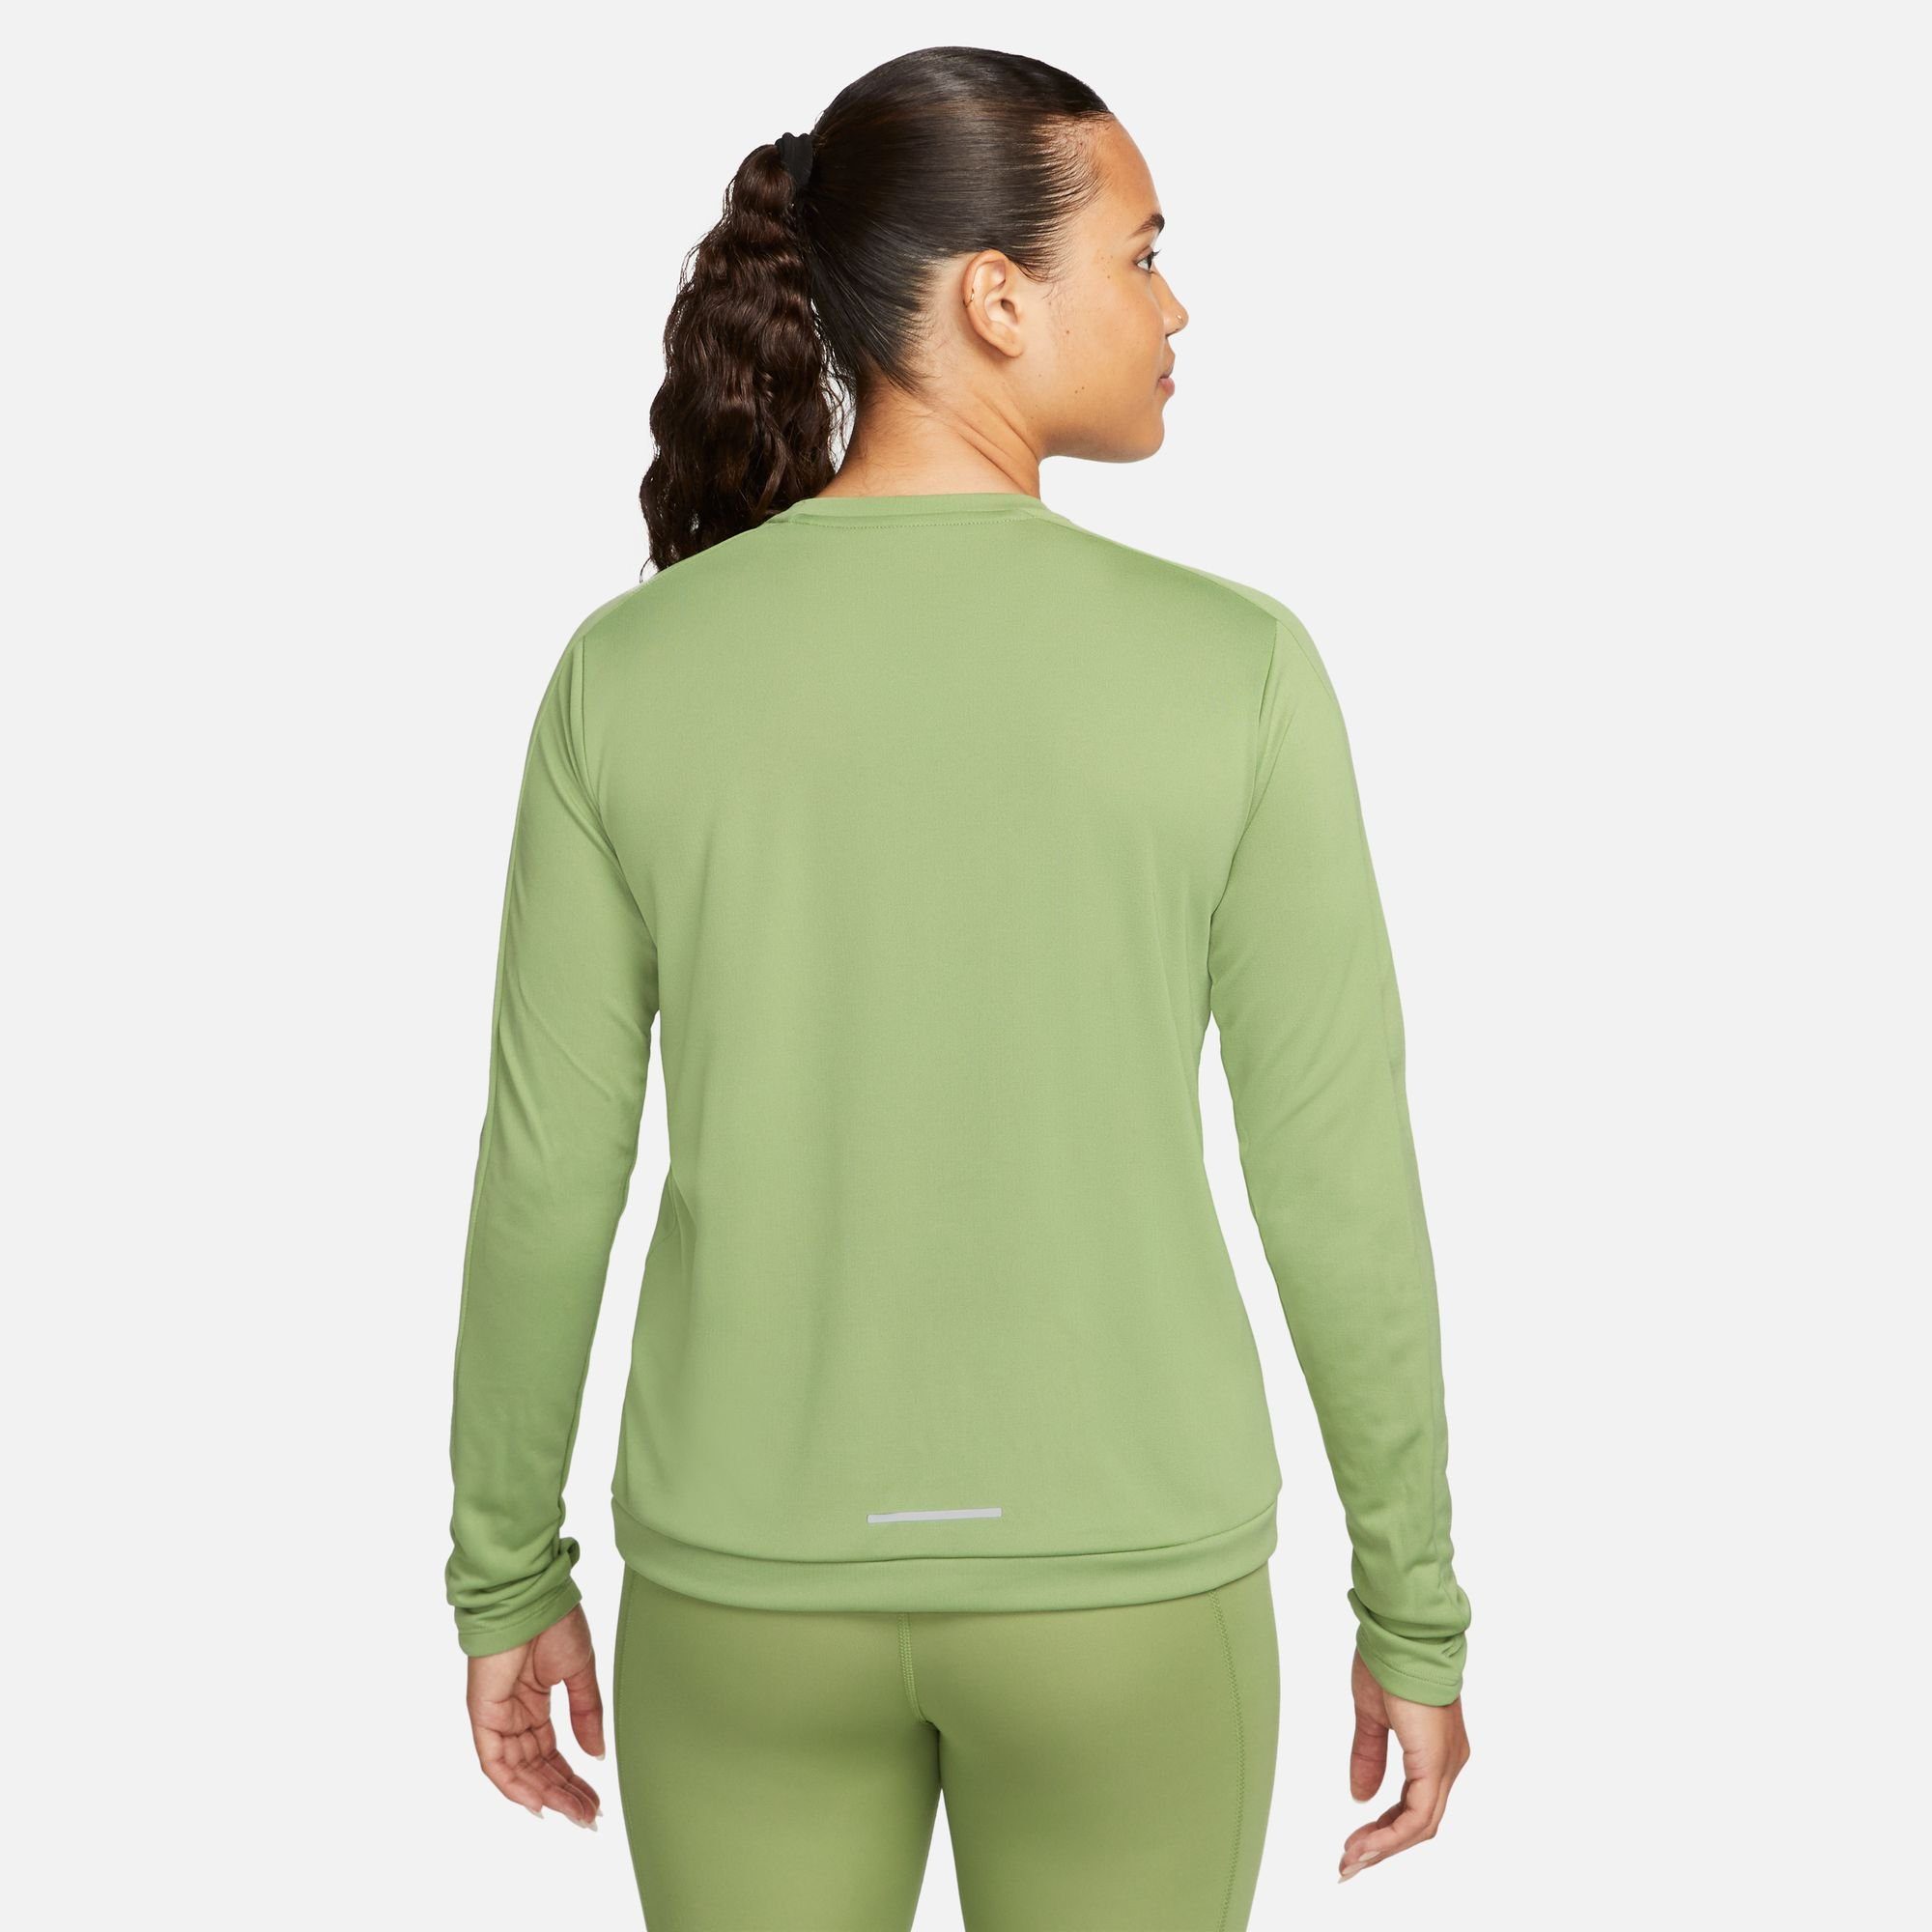 grün RUNNING WOMEN'S TOP Nike CREW-NECK DRI-FIT Laufshirt